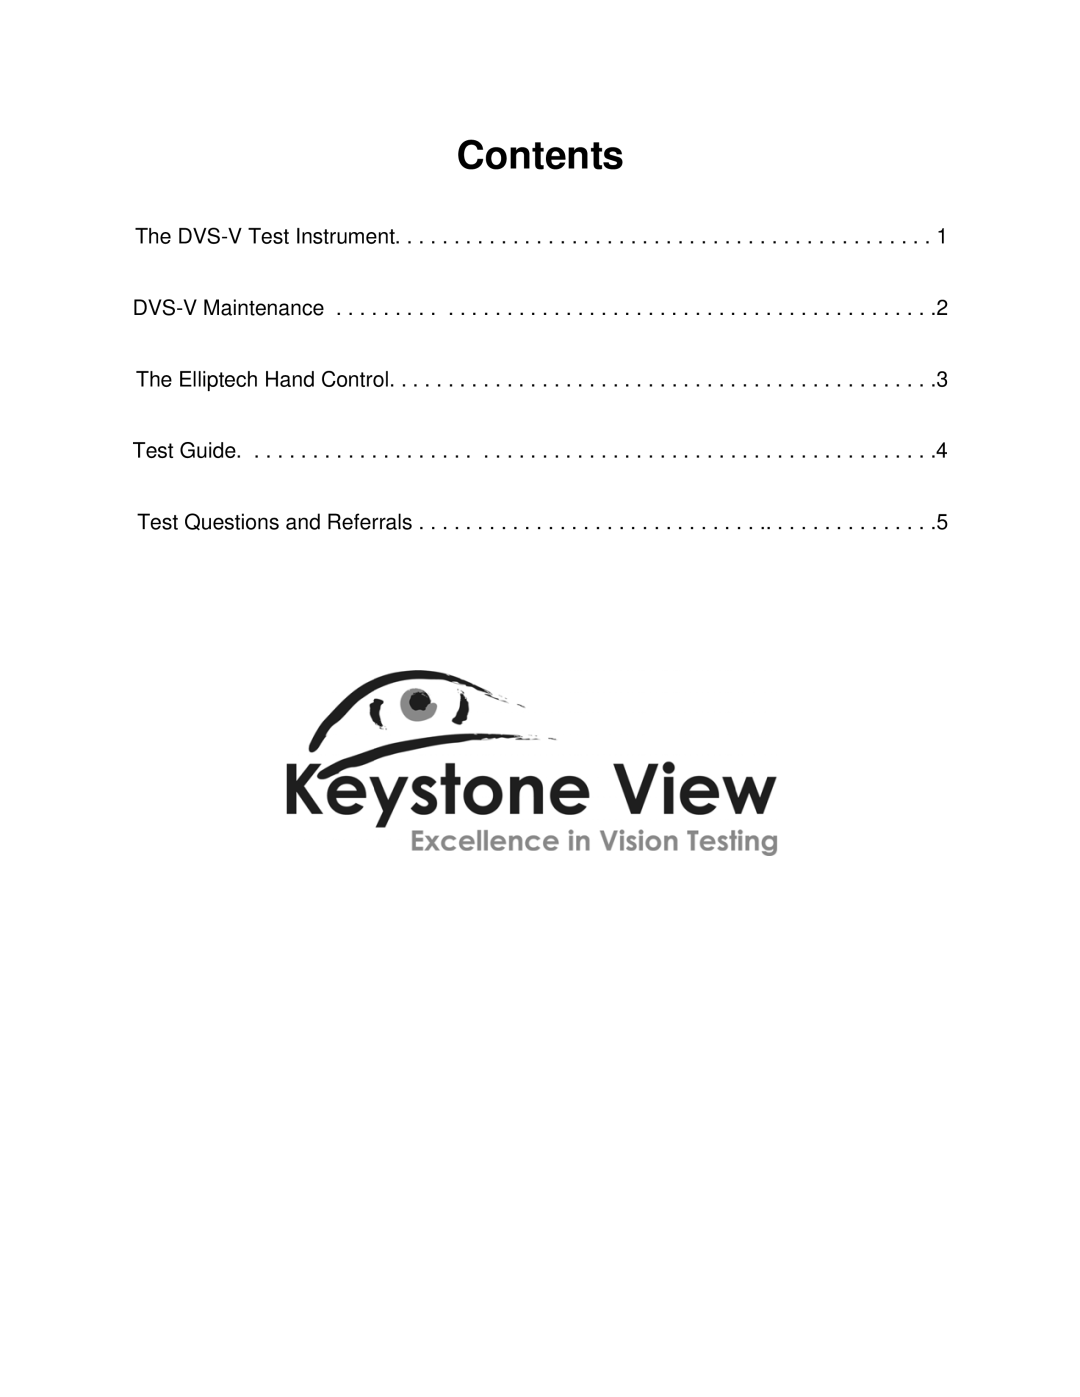 Keystone 1157 instruction manual Contents, The DVS-V Test Instrument DVS-V Maintenance 